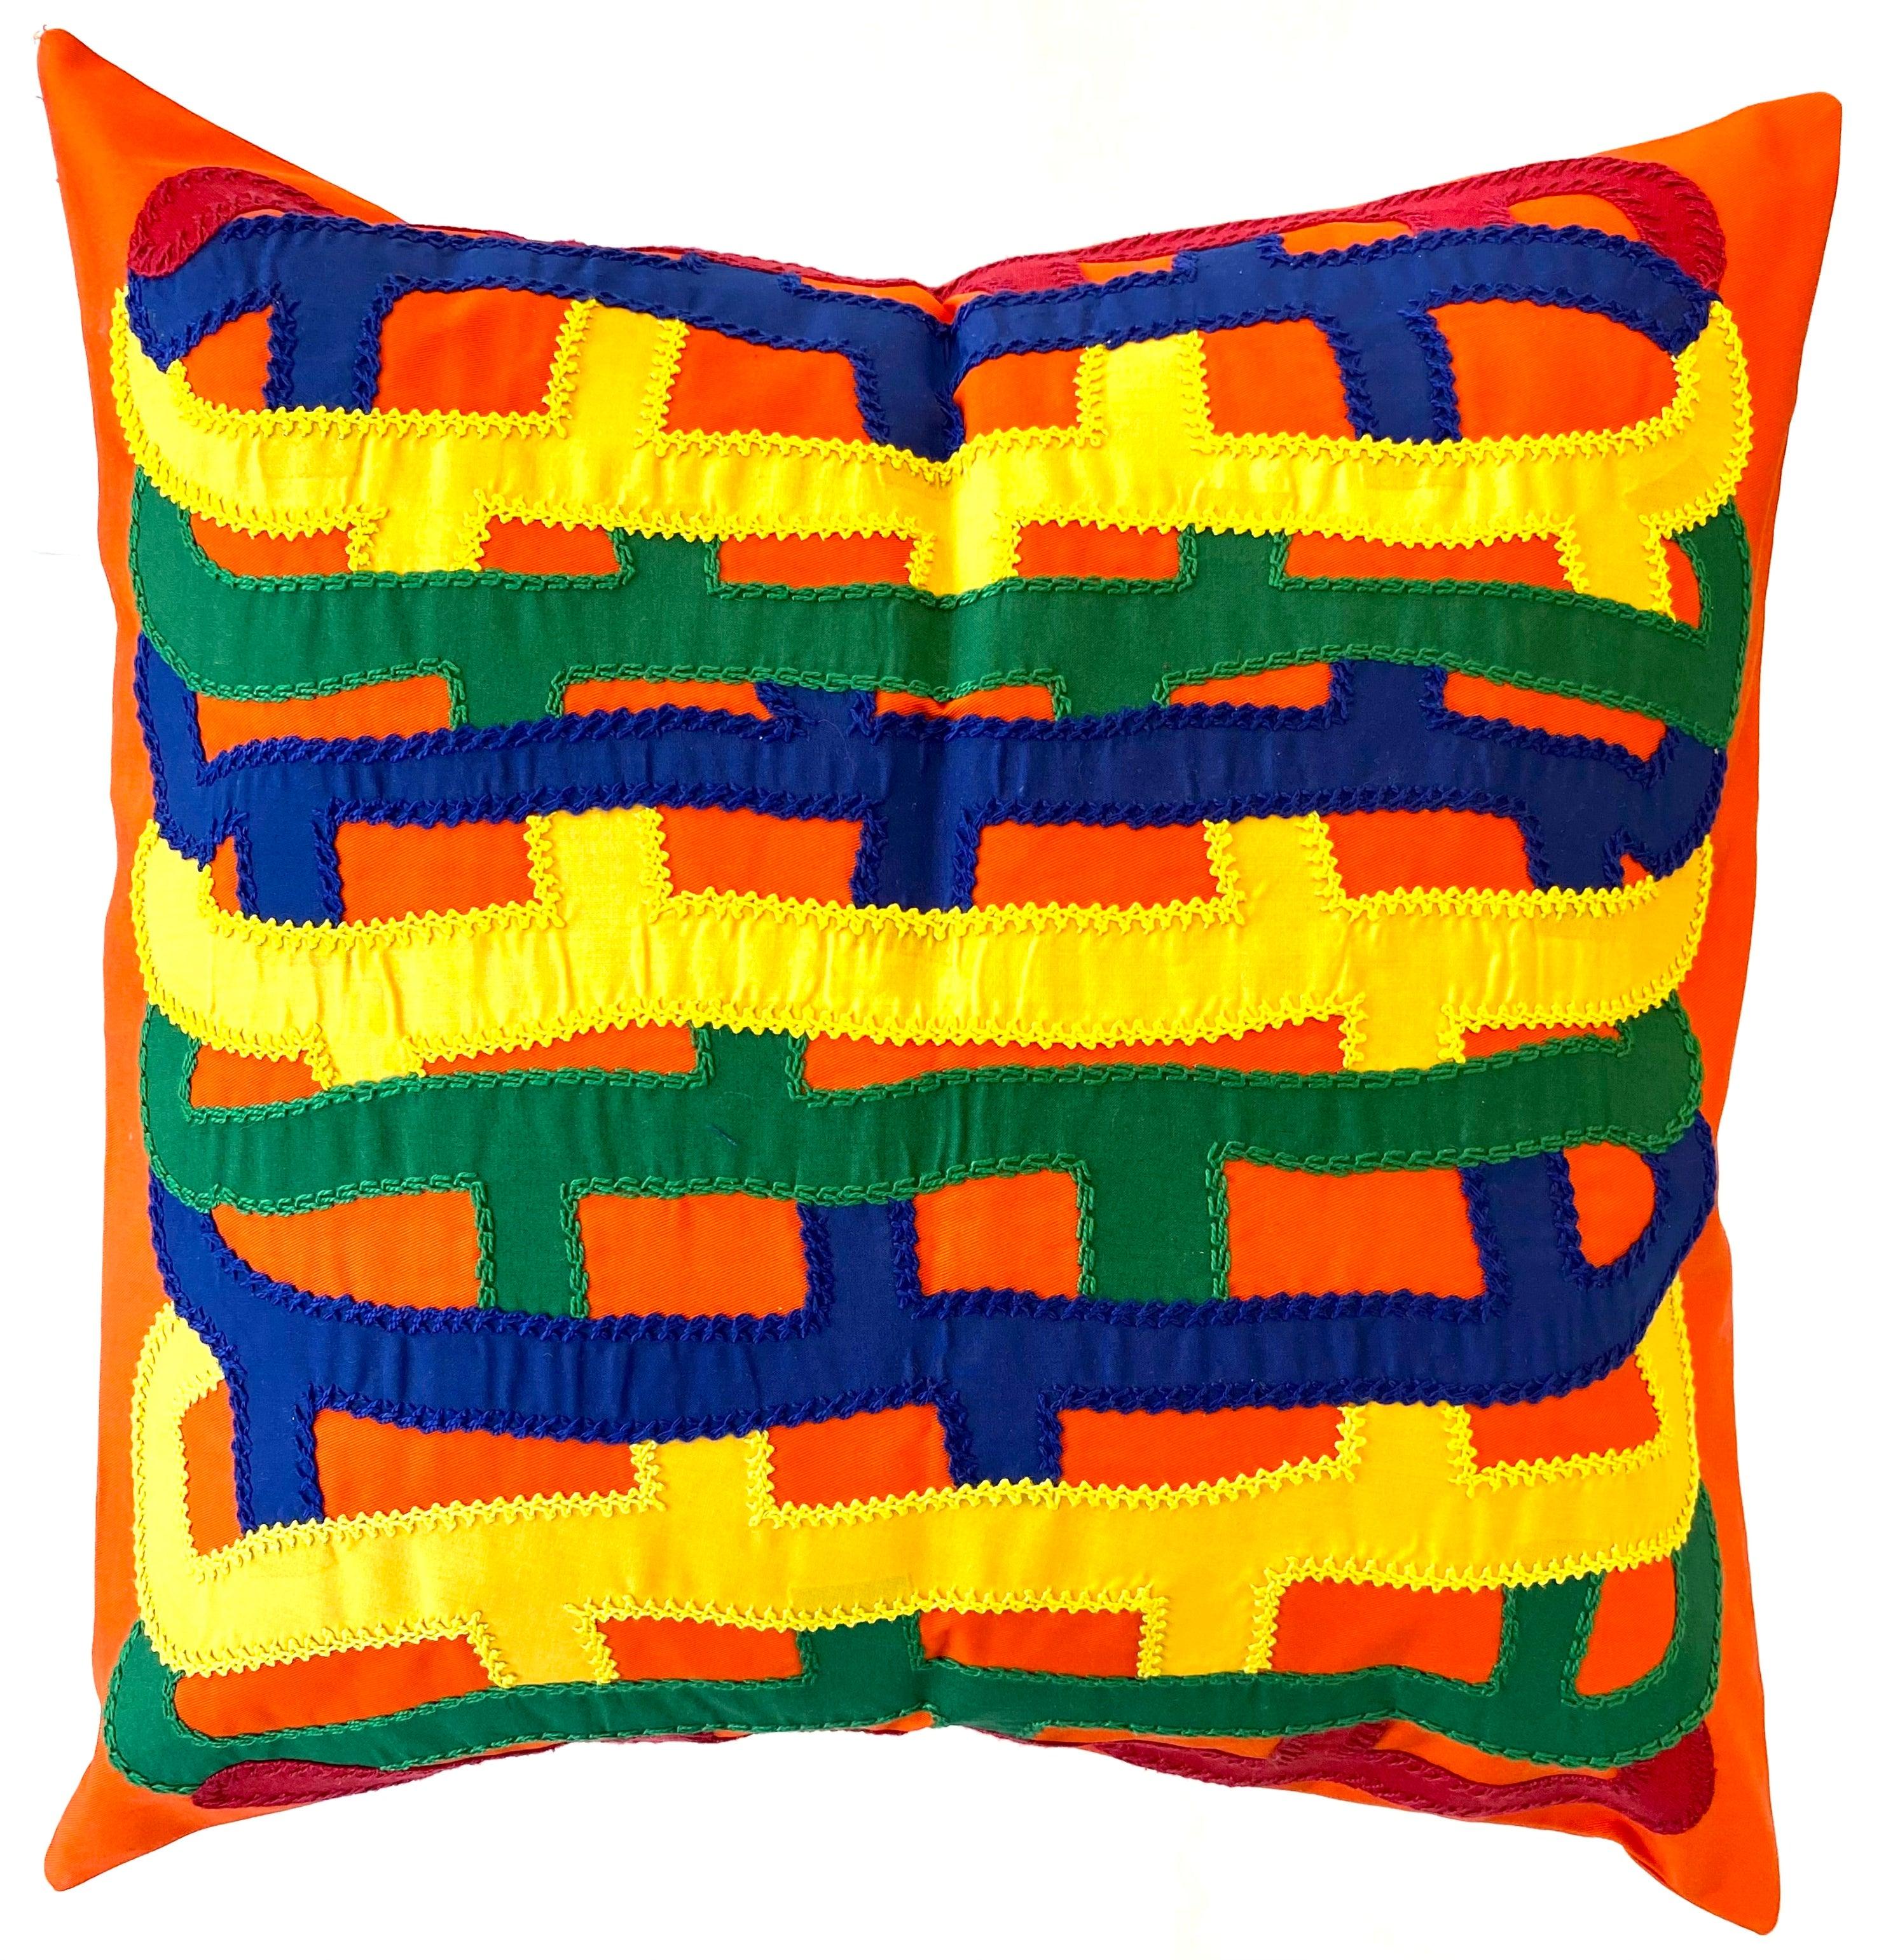 Basket of Color Pillow on Orange Honduras Threads